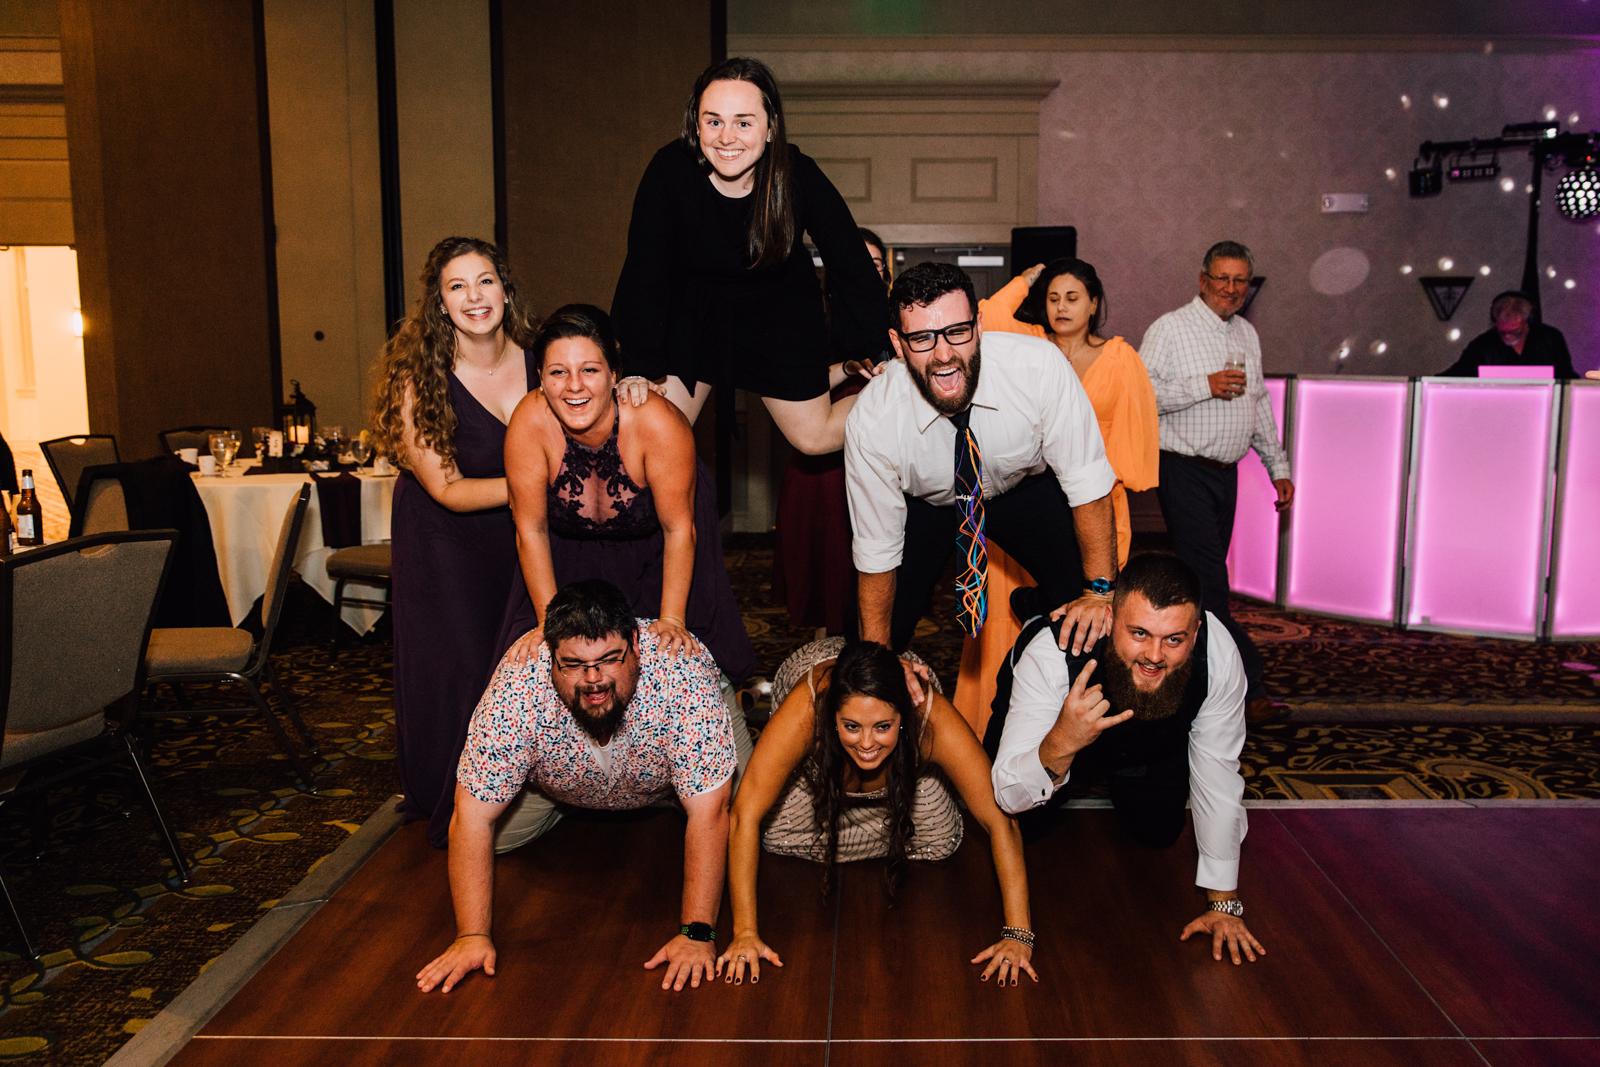  Wedding guests create a human pyramid during 1000 Islands Harbor Hotel wedding reception 